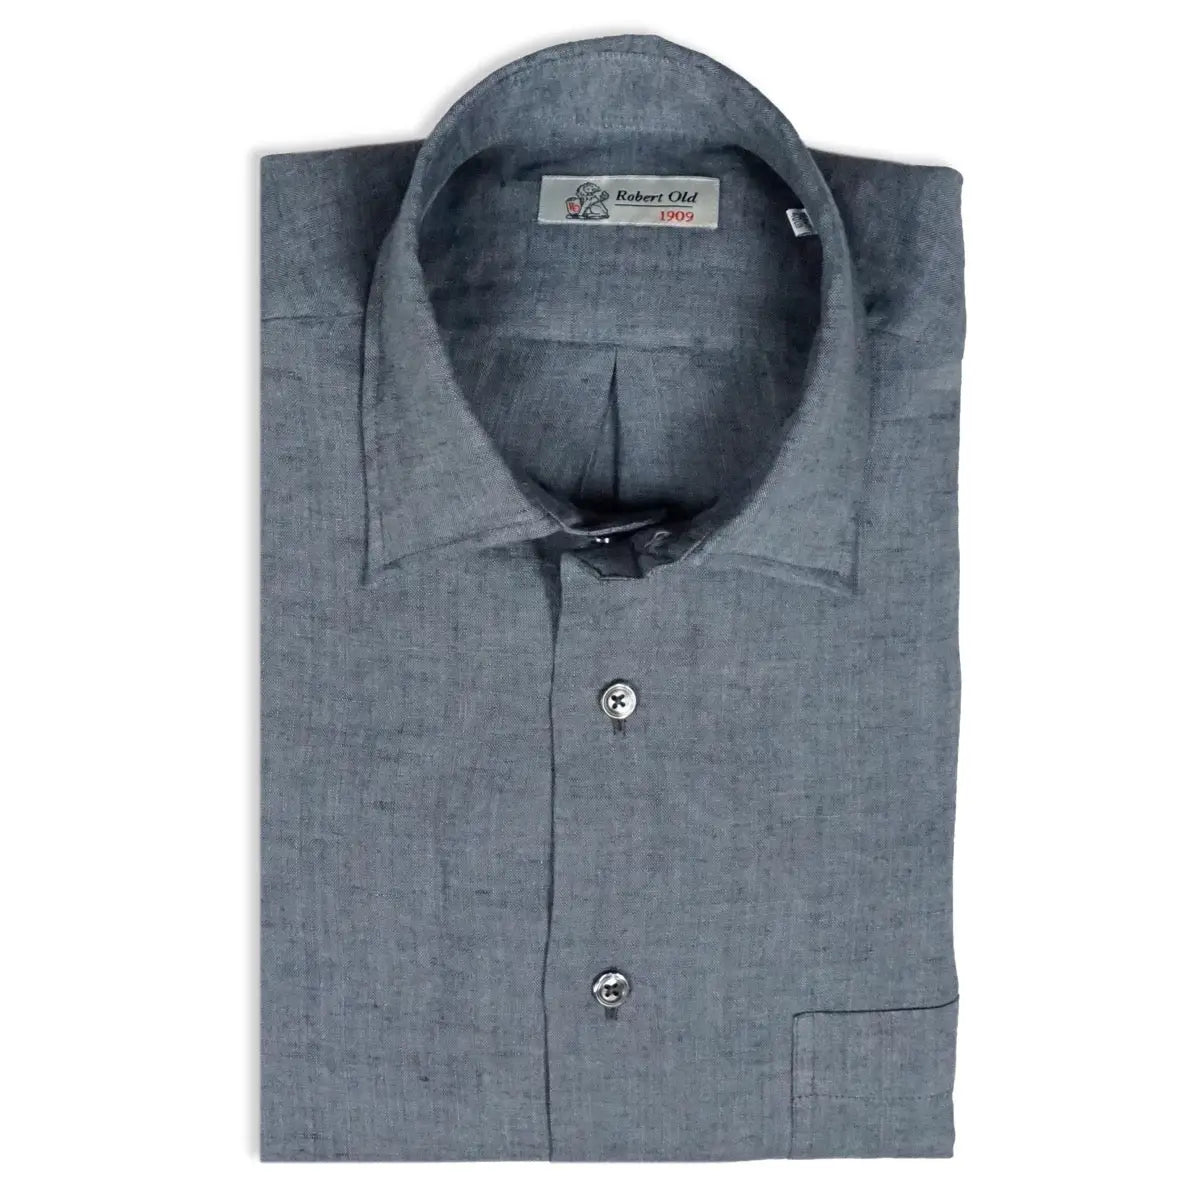 Charcoal Grey Pure Italian Linen Long Sleeve Shirt  Robert Old   